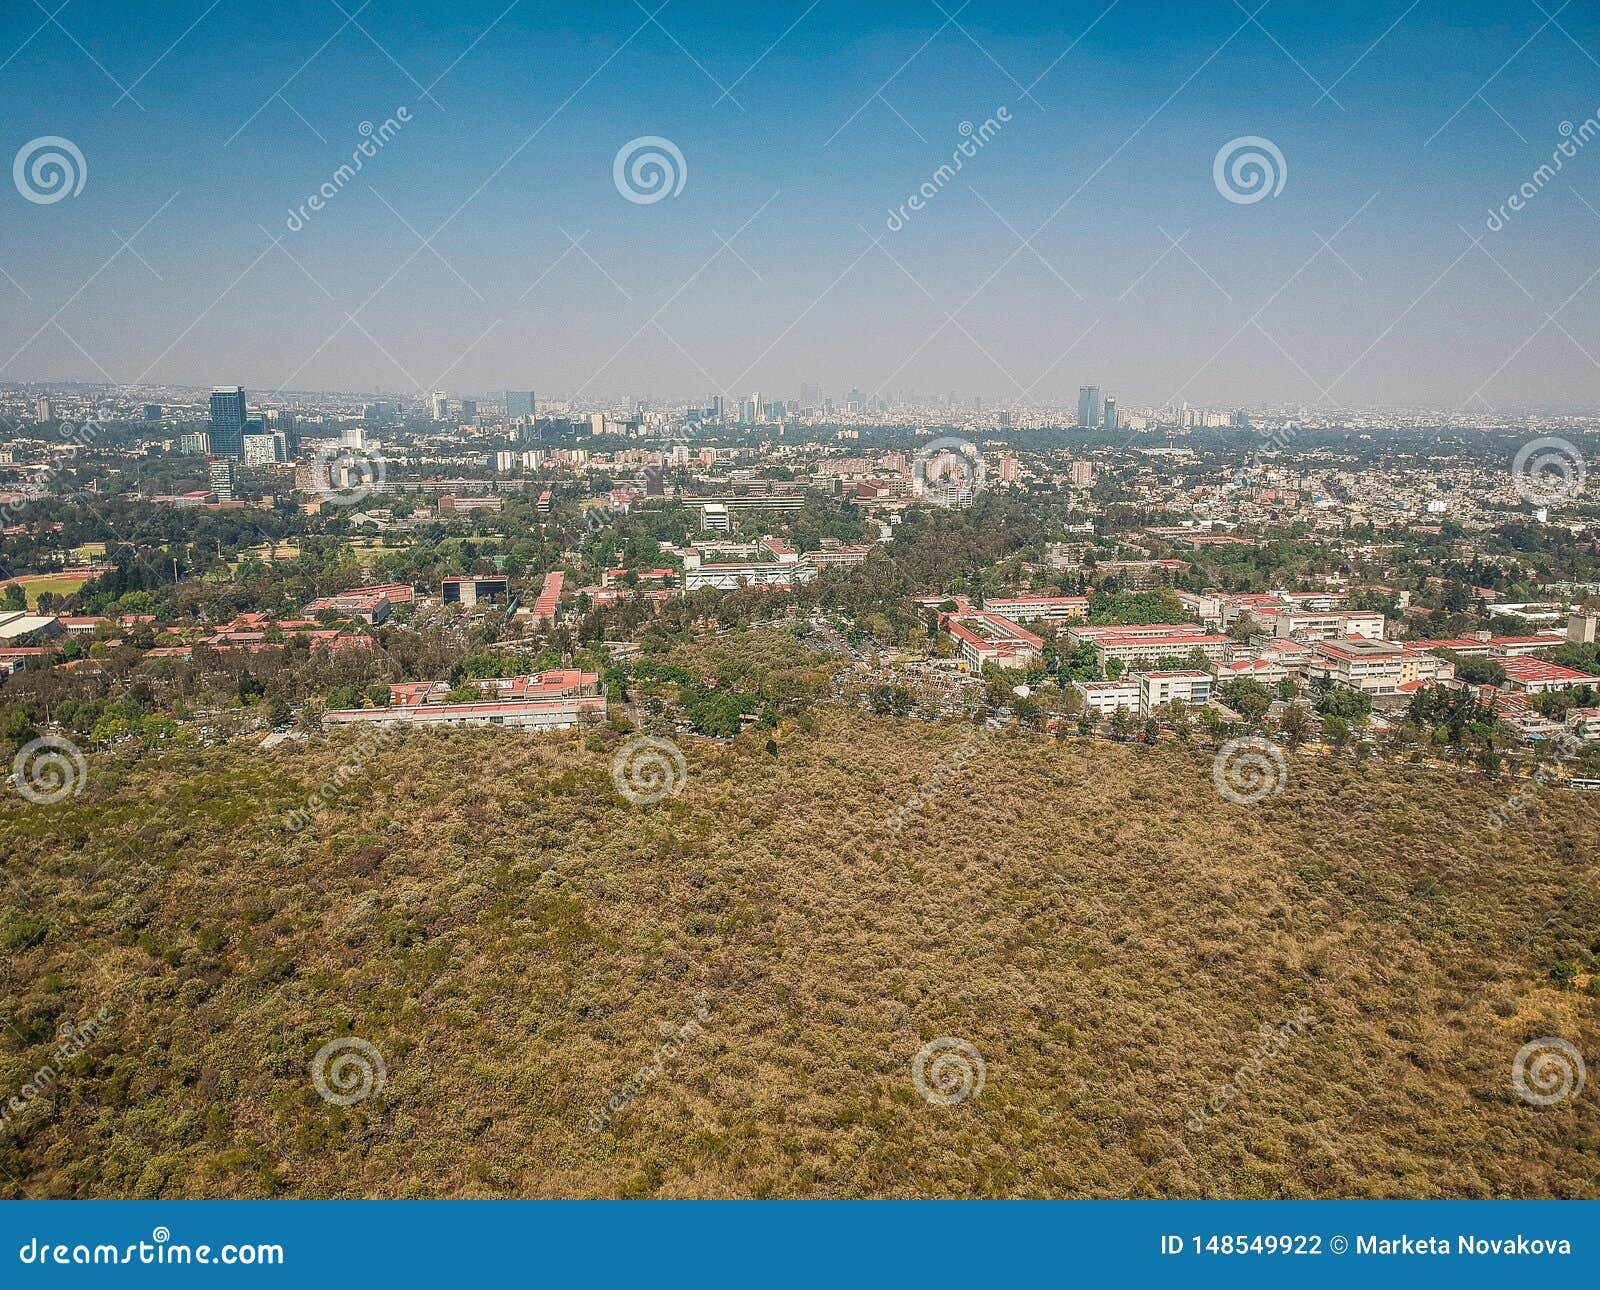 aerial photo of espacio escultorico and mexico city